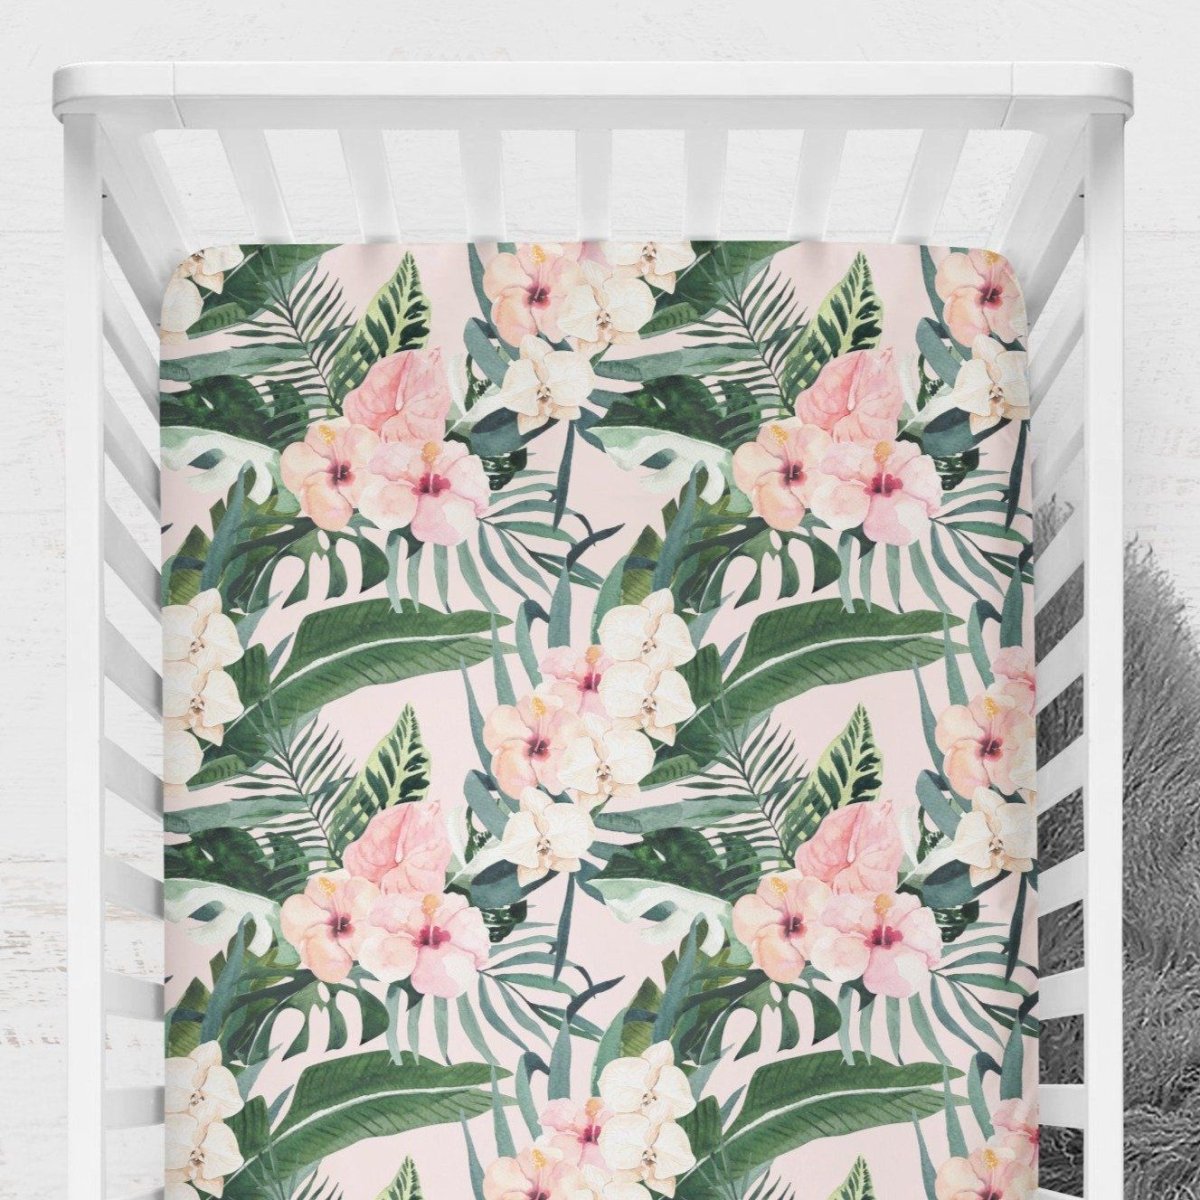 Tropical Floral Crib Sheet - gender_girl, Theme_Floral, Theme_Tropical